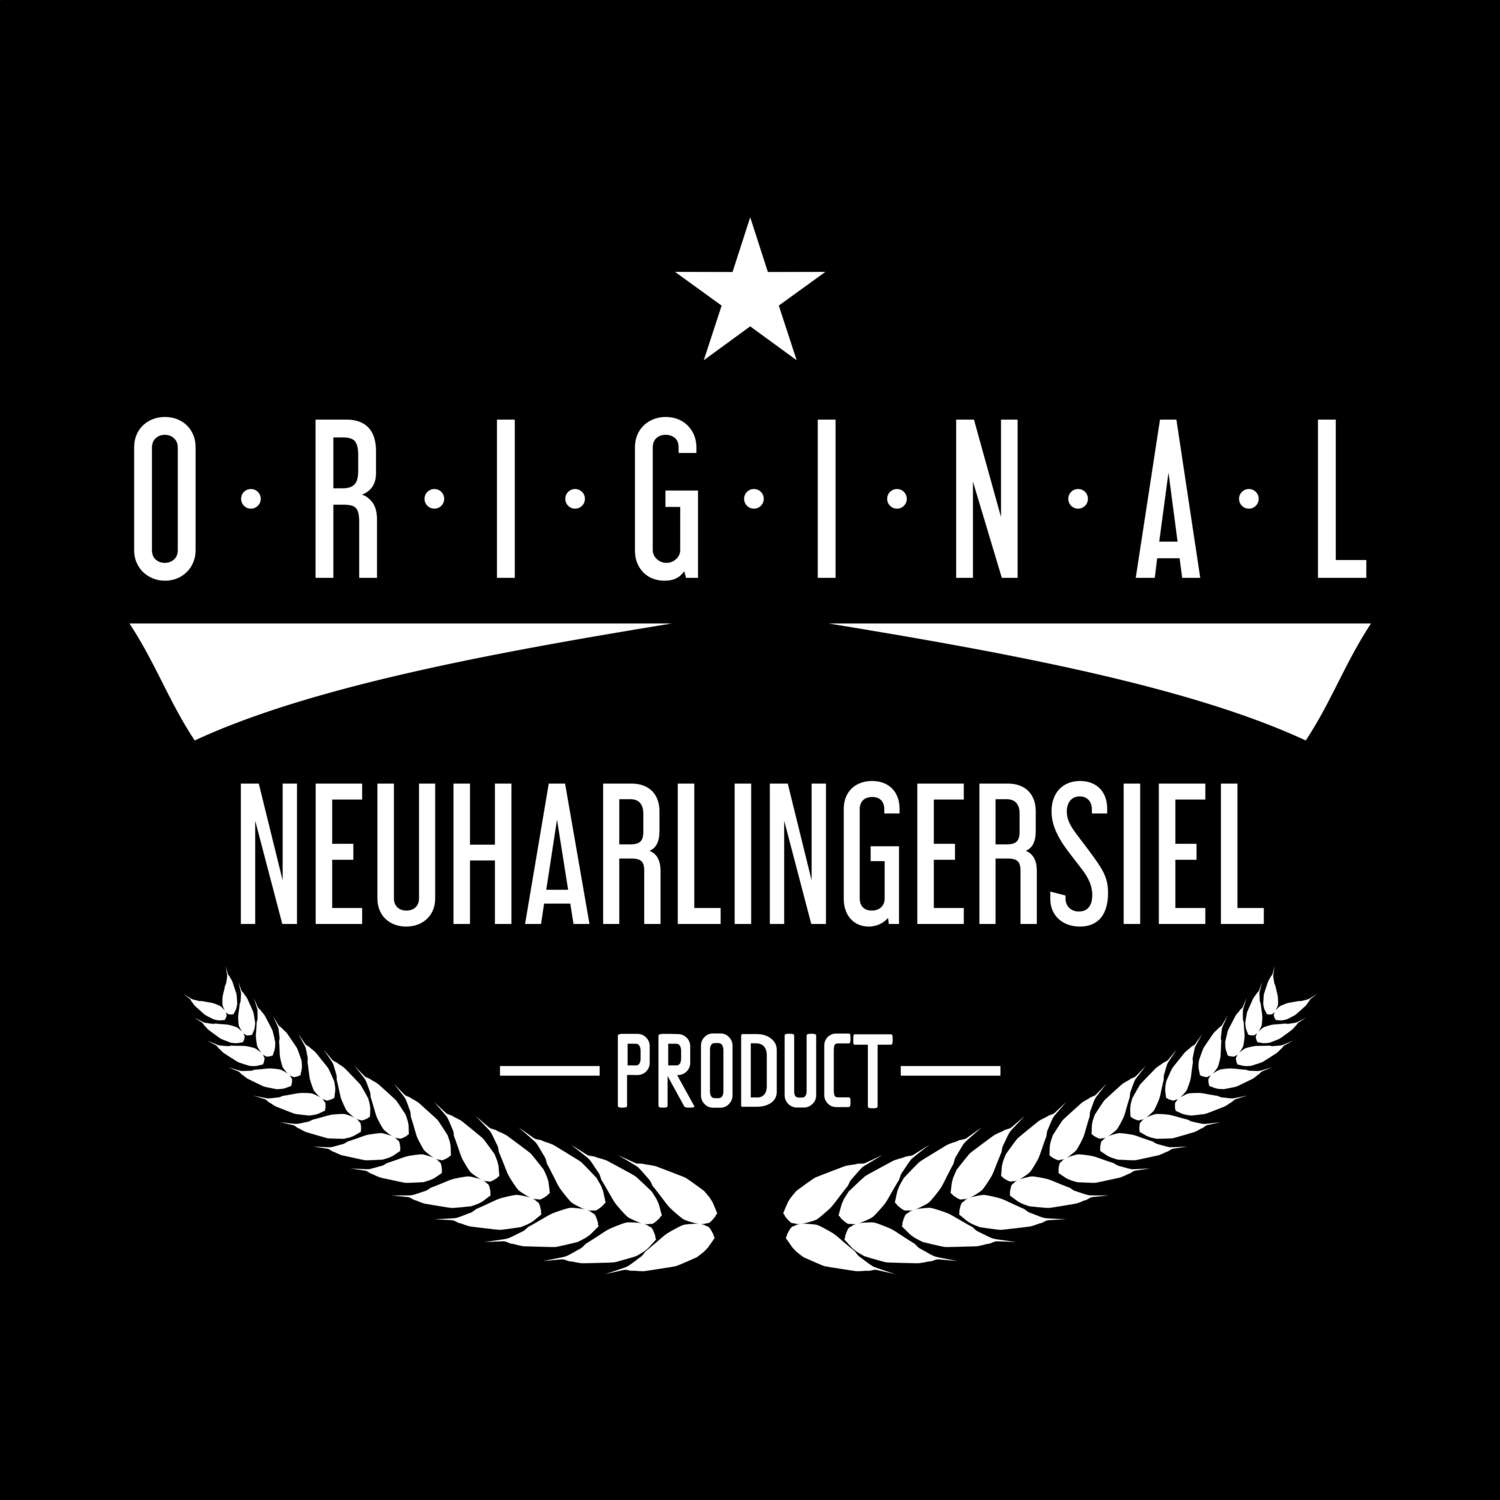 Neuharlingersiel T-Shirt »Original Product«